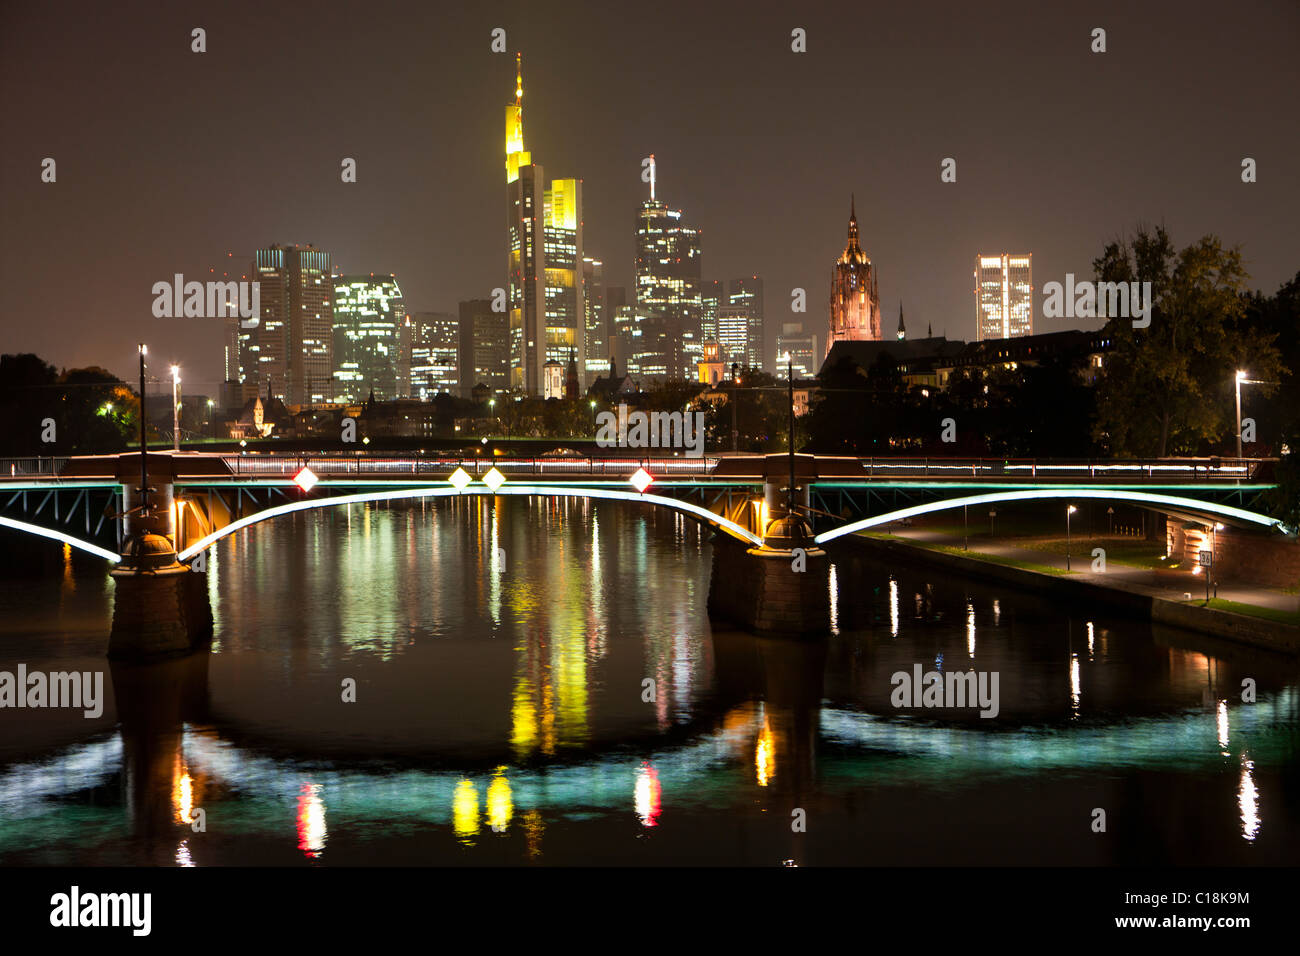 Frankfurt City skyline by night Banque D'Images